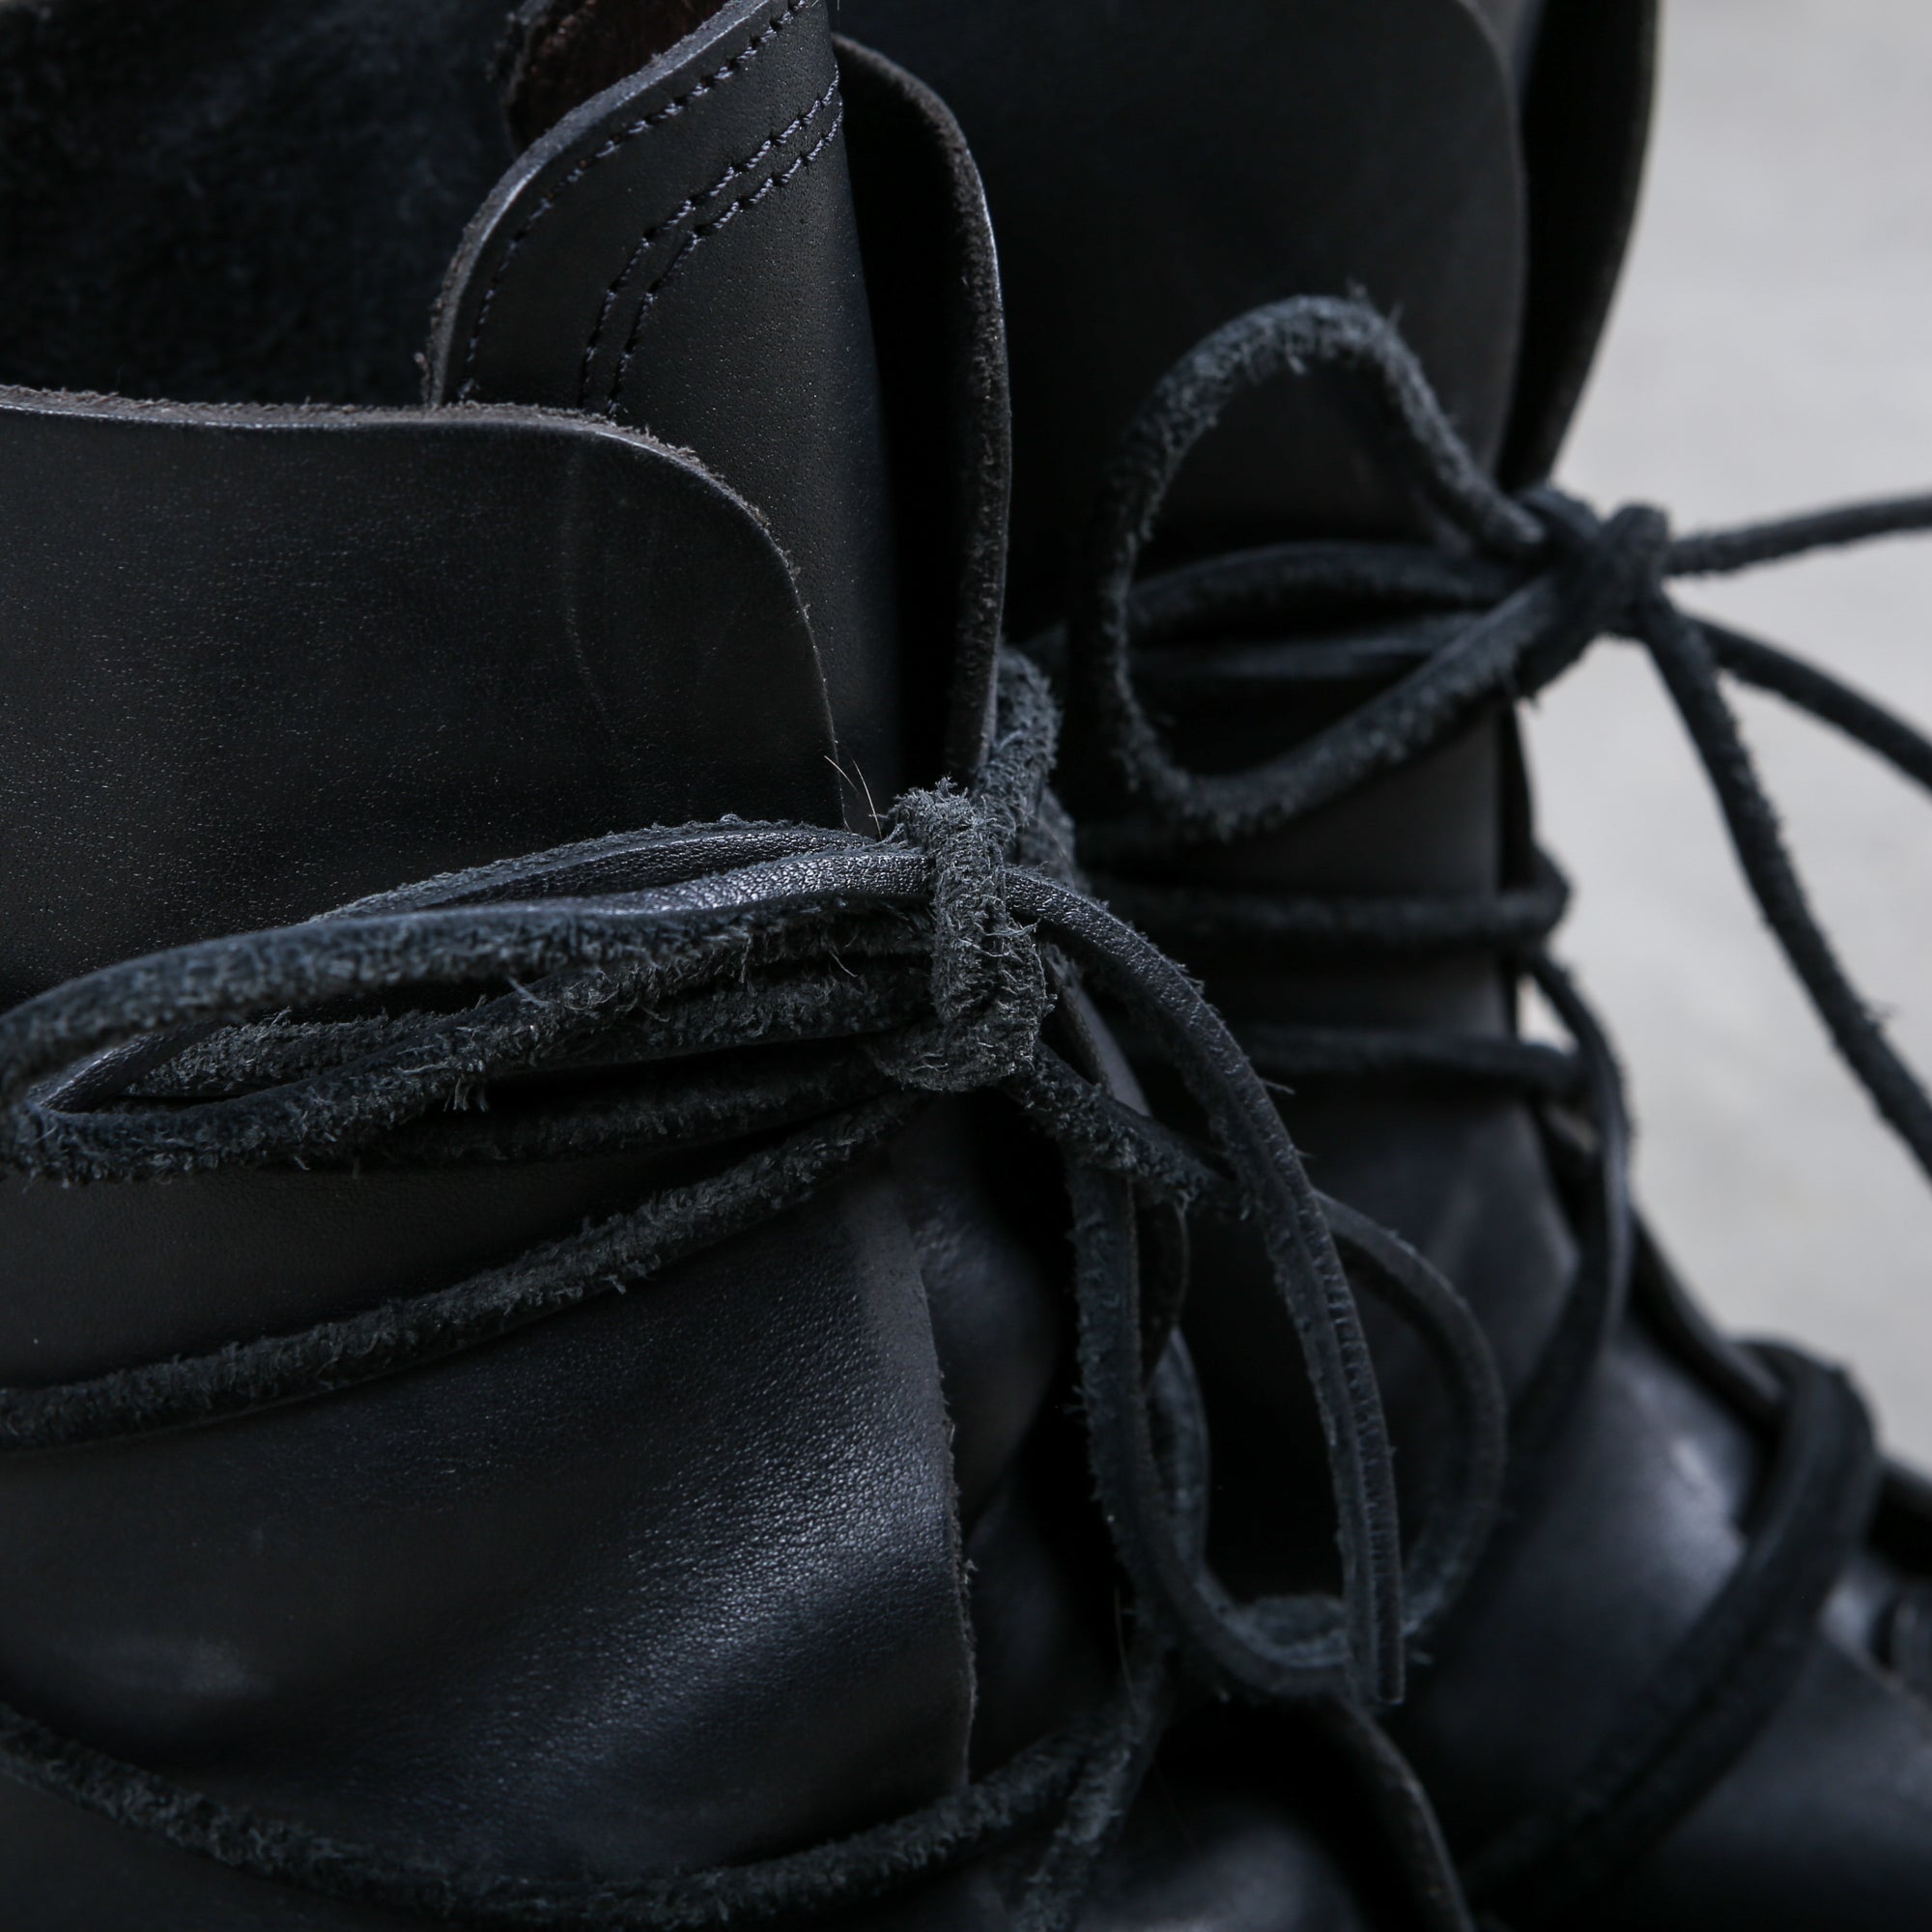 Dirk Bikkembergs Black Lace through Heel Woden Stacked boot Size 38